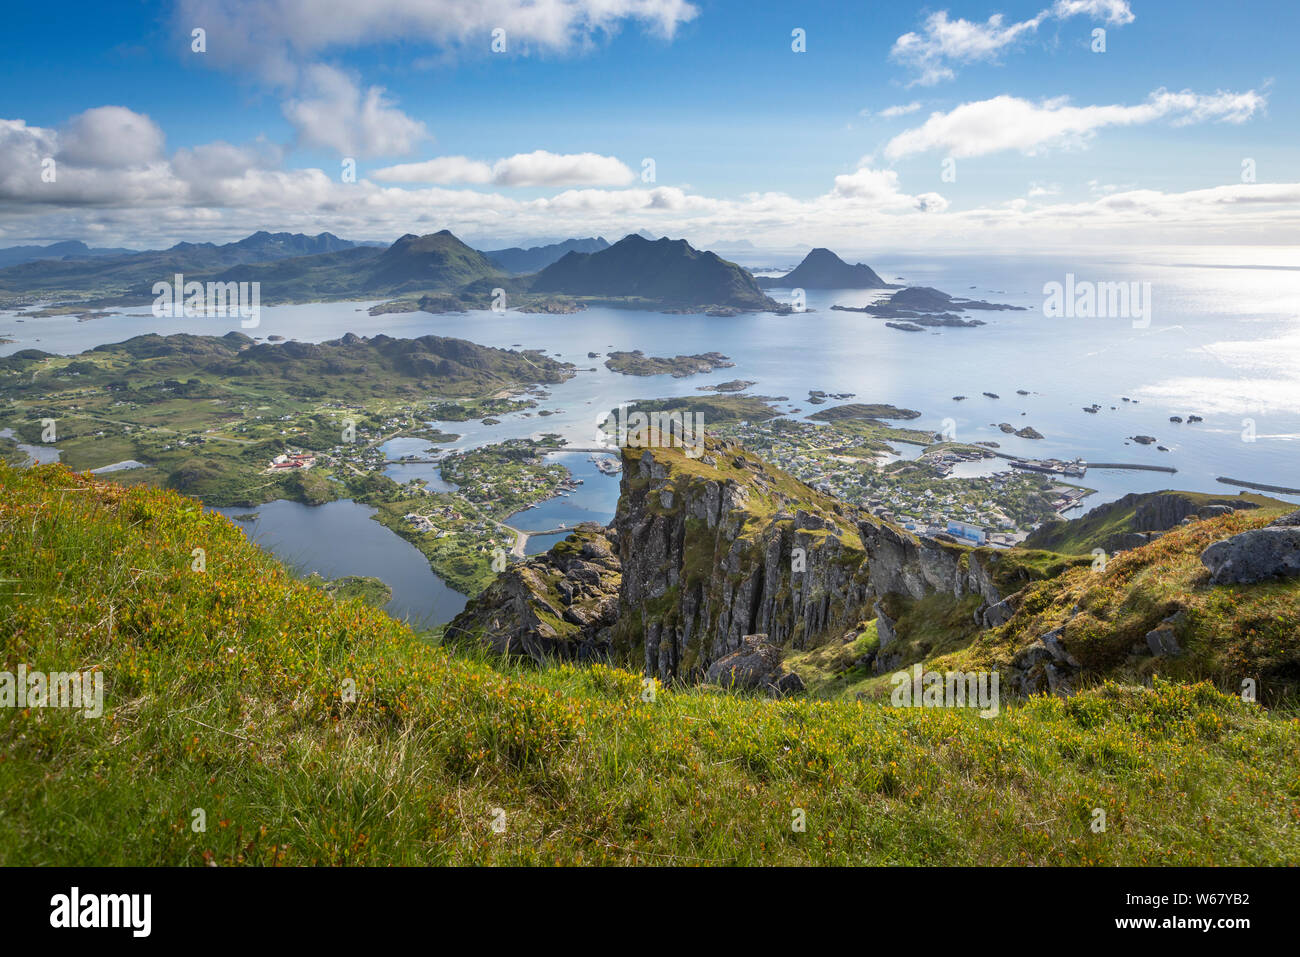 Guardando da Nonstinden montagna verso Ballstad, Vestvågøya isola, isole Lofoten in Norvegia Foto Stock